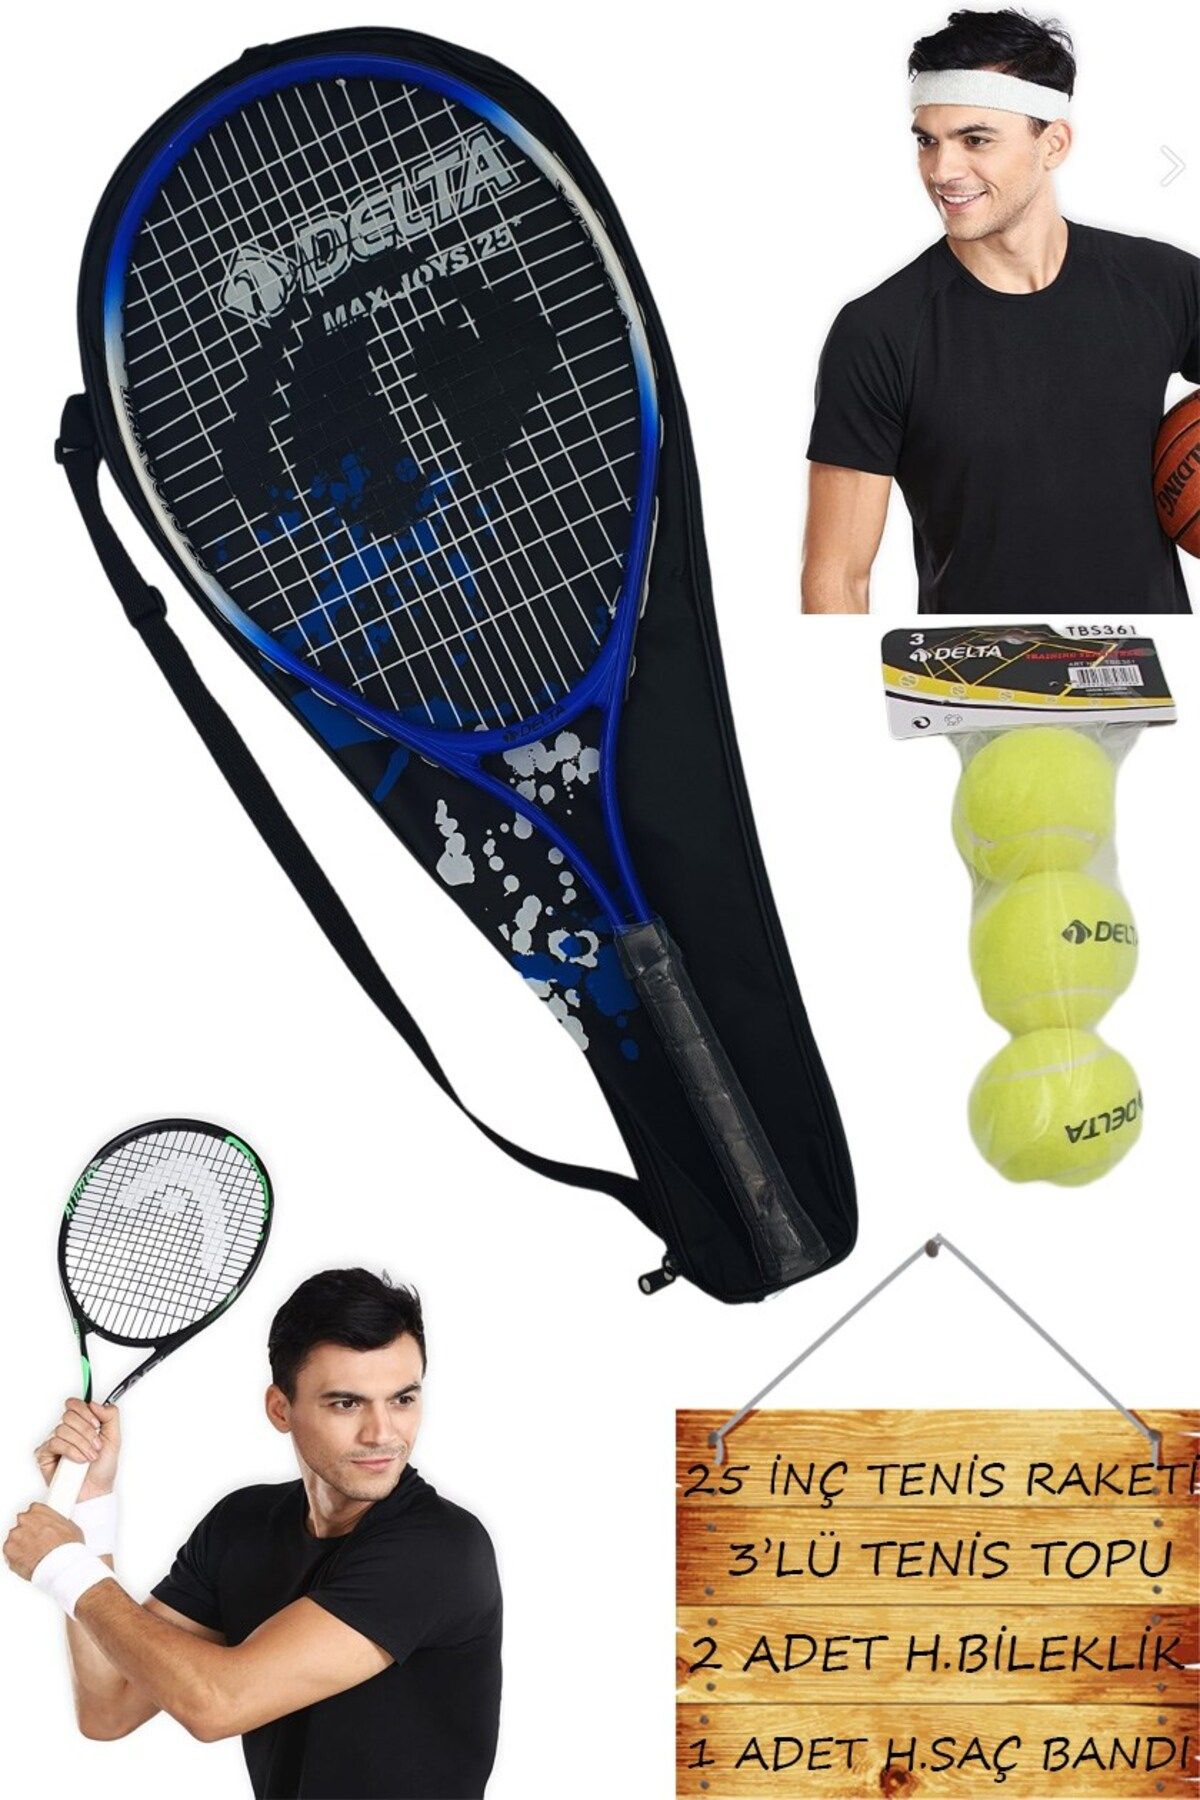 Tosima Max Joy 25 İnç Tenis Raketi Çocuk Tenis Raketi Tenis Topu Bileklik Saç Bandı Set